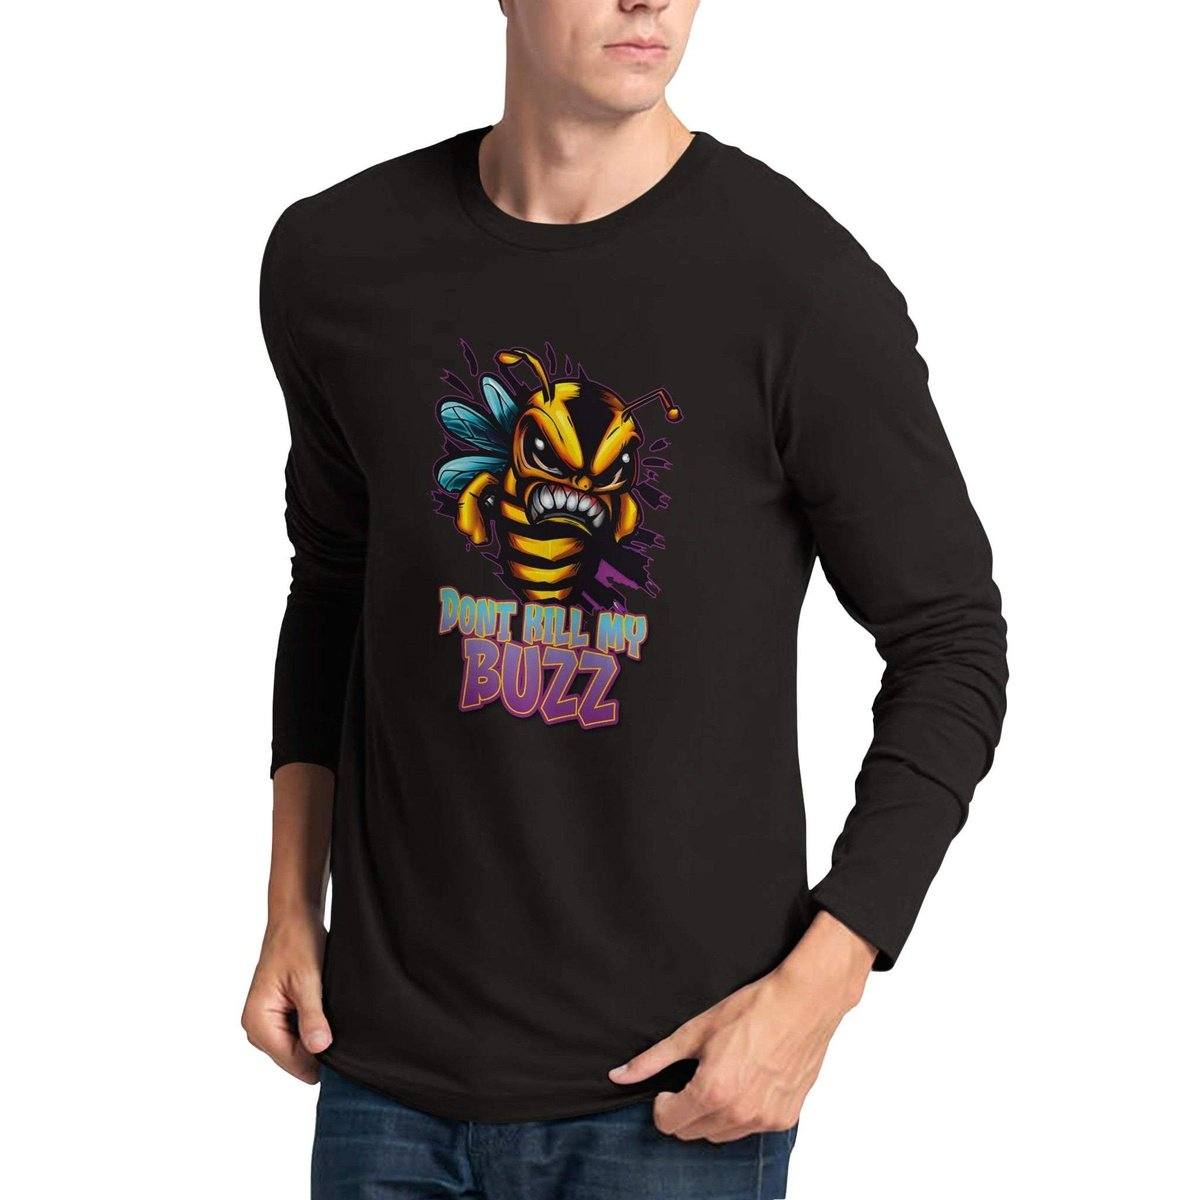 Dont Kill My Buzz Long sleeve T-shirt Australia Online Color Black / S